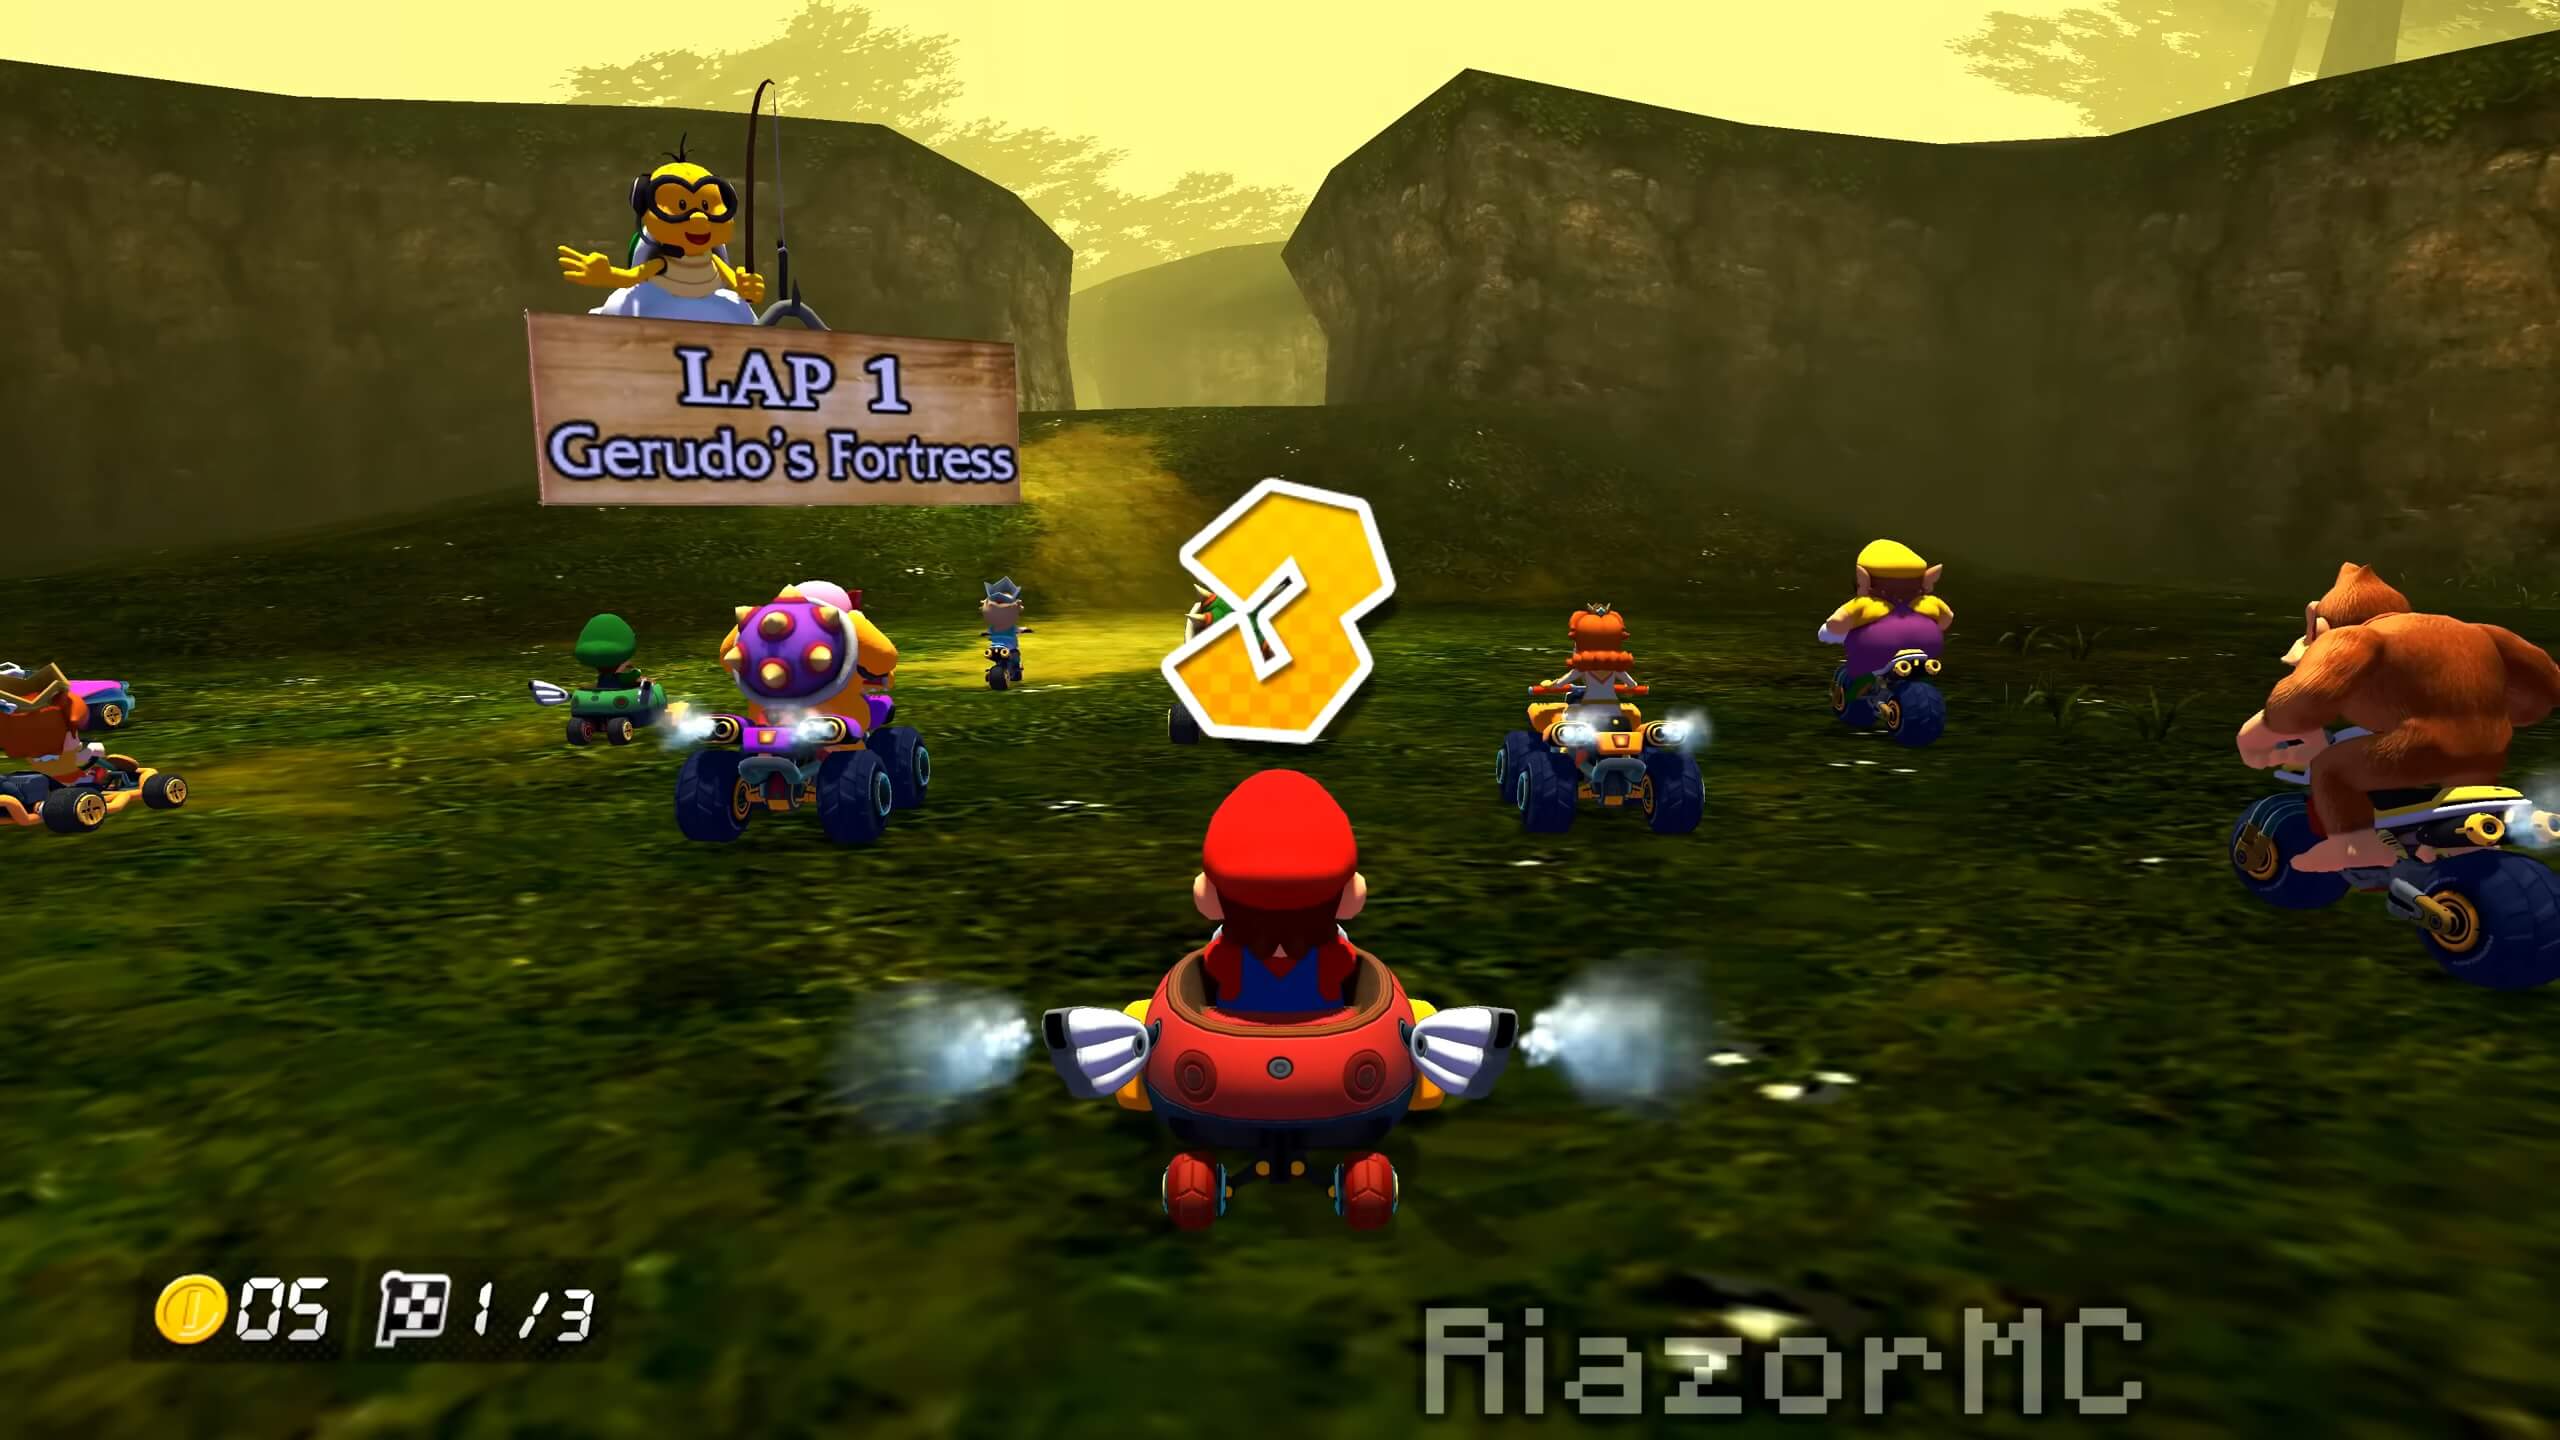 This Zelda Ocarina of Time Custom Track for Mario Kart 8 looks incredible